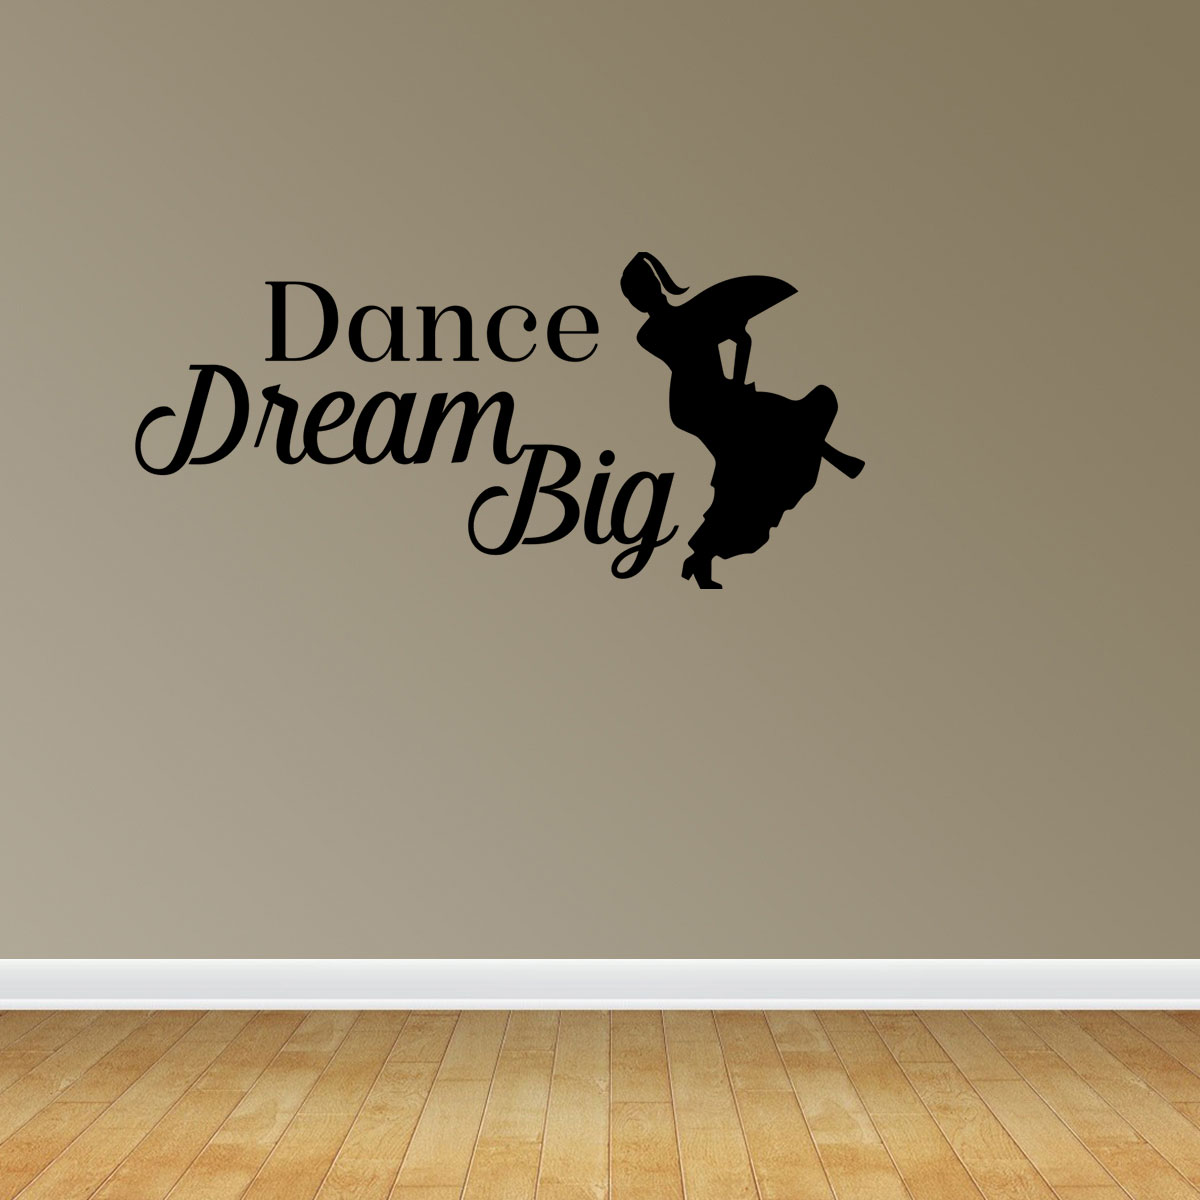 Dance Dream Big Wall Decal